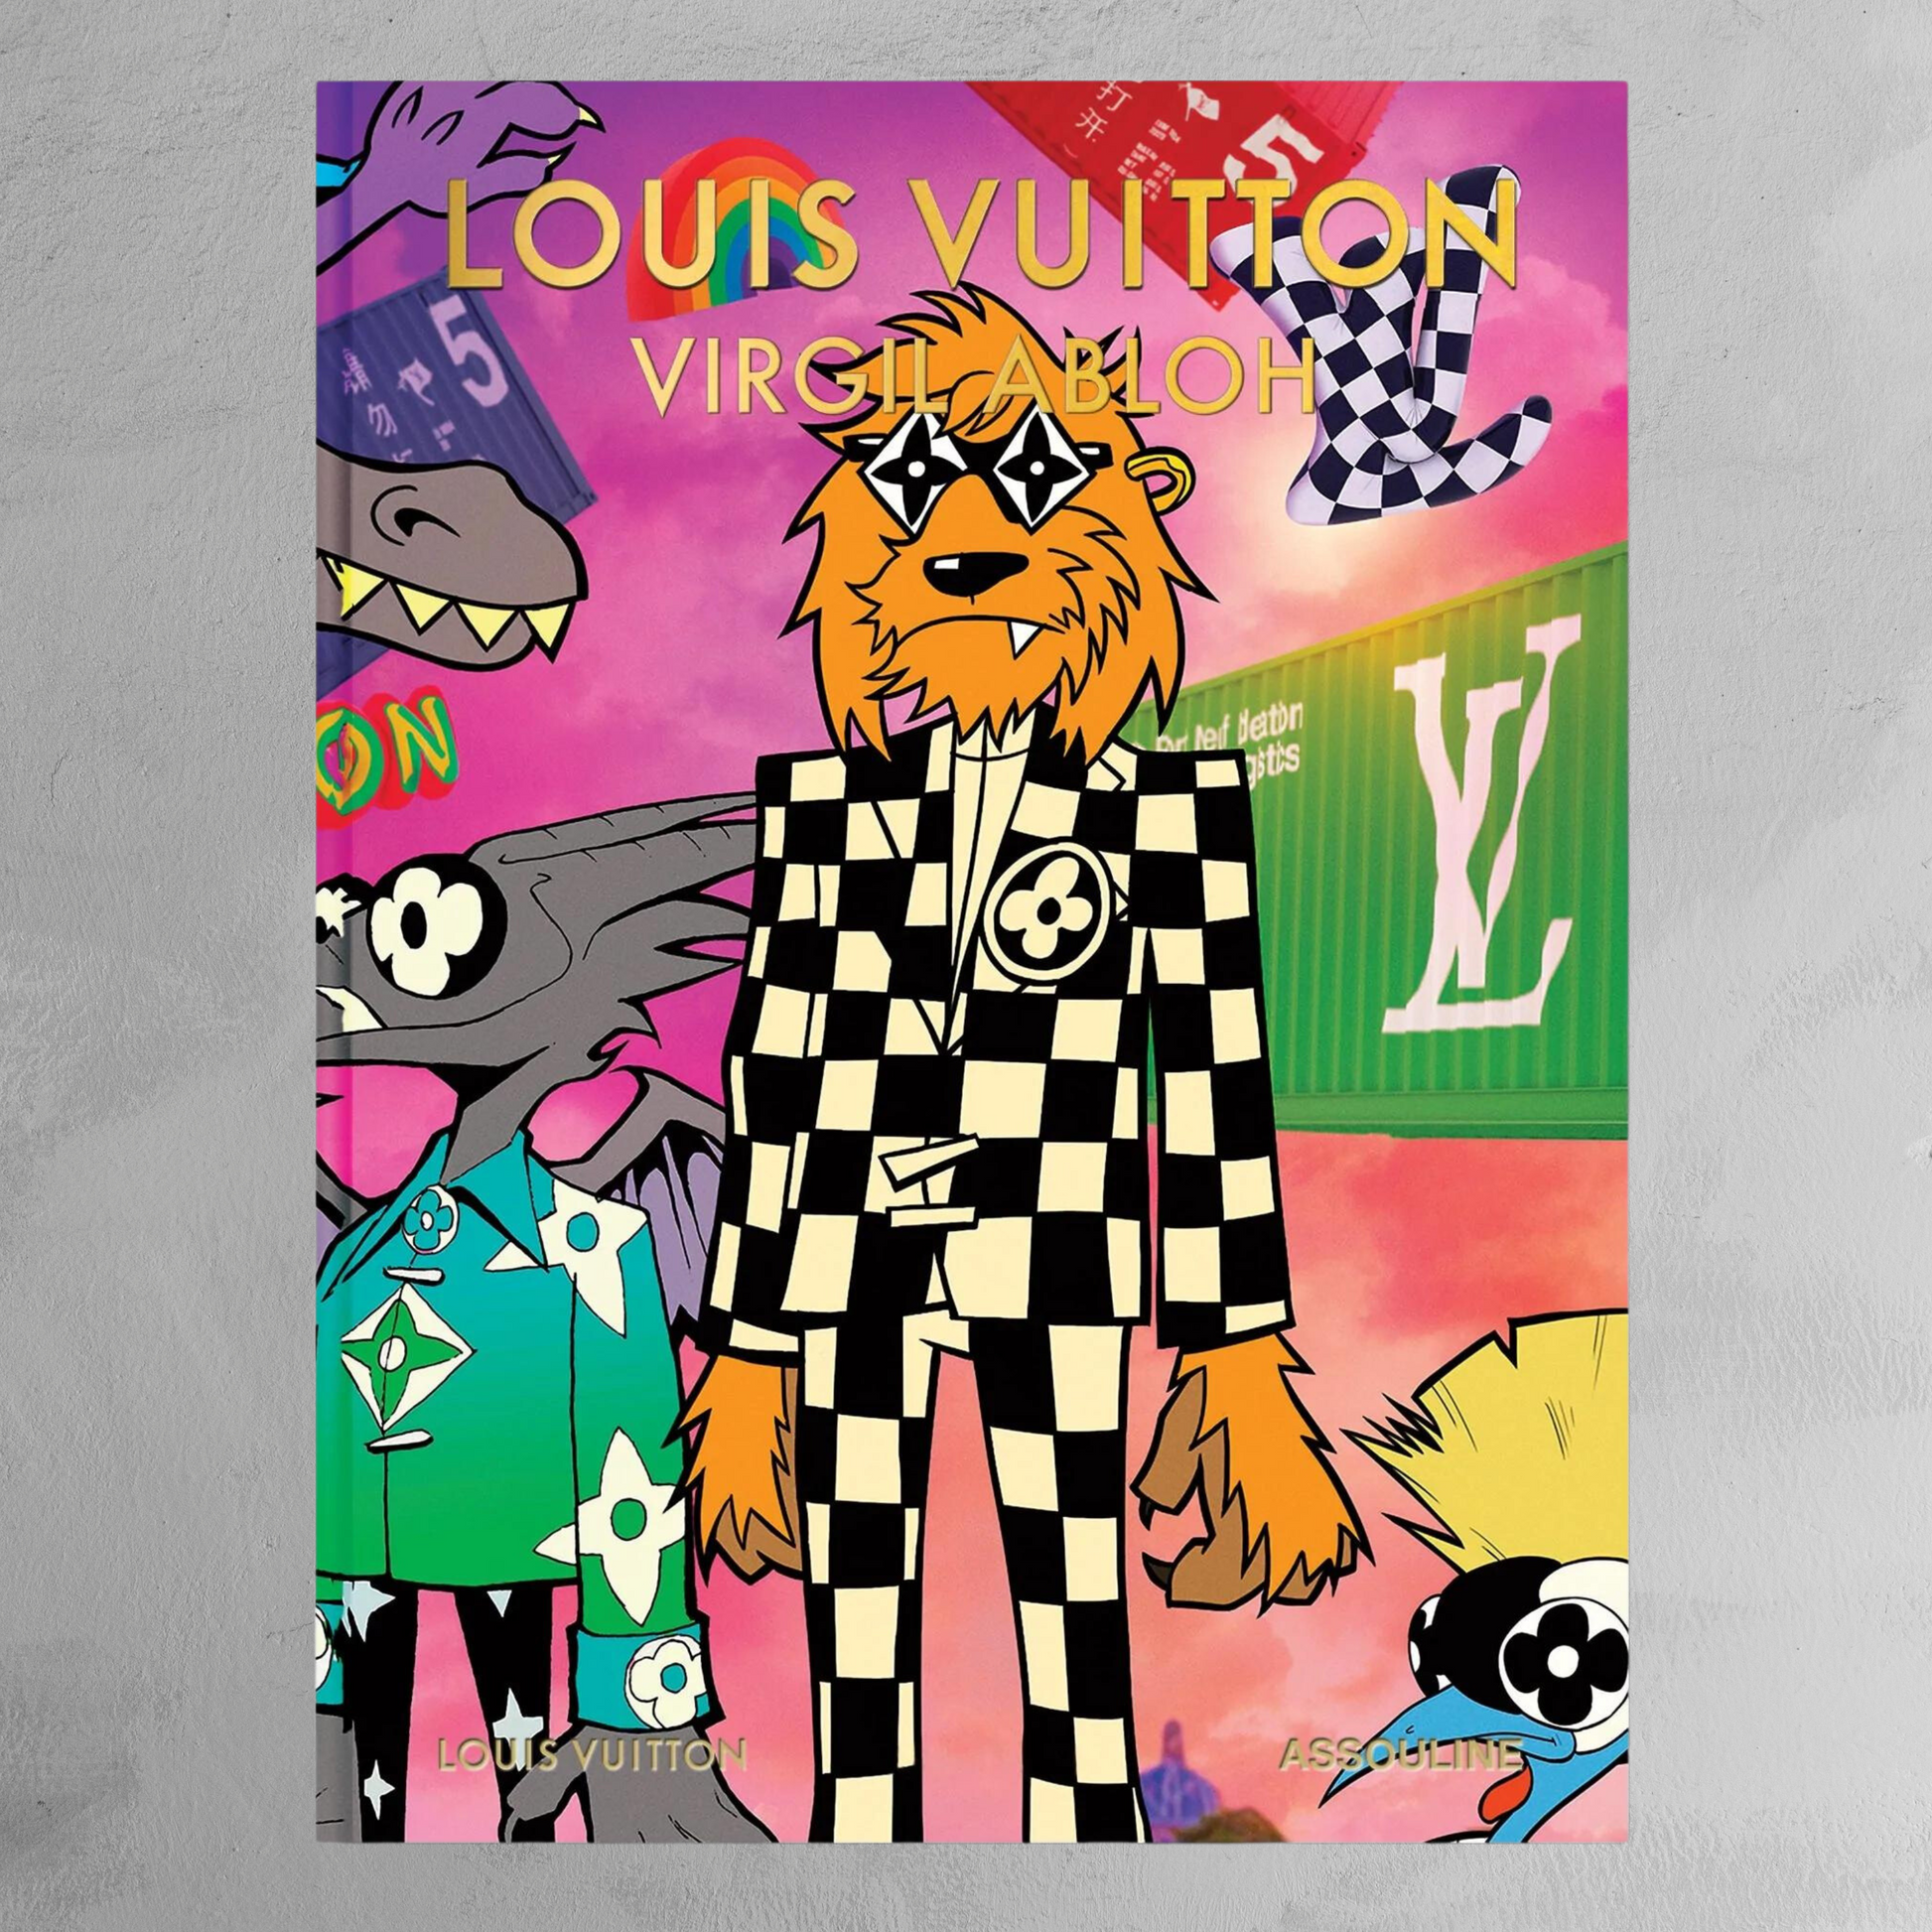 Virgil Abloh Makes His Return To Louis Vuitton